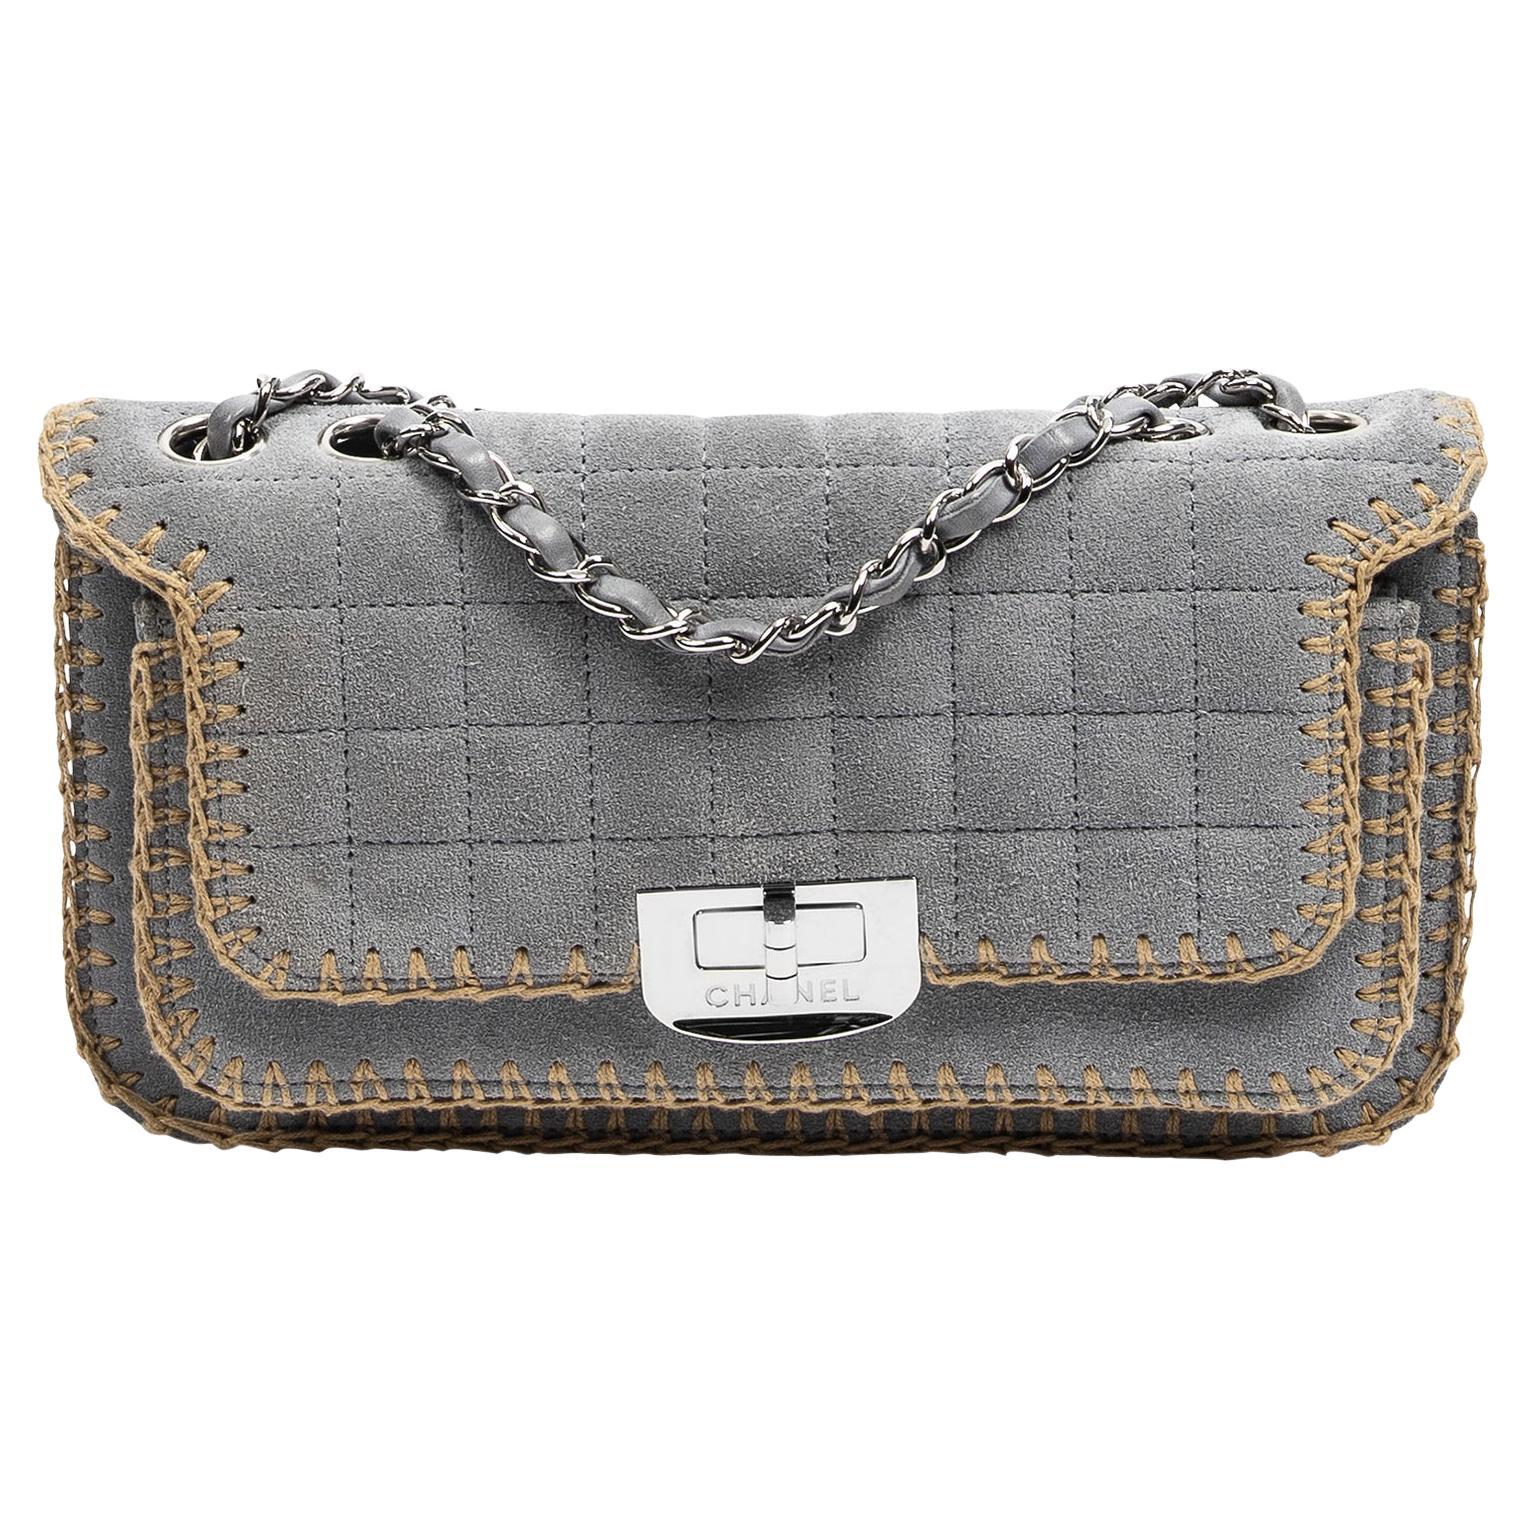 Chanel 2005 Limited Edition Grey Suede Wild Stitch Shoulder Bag